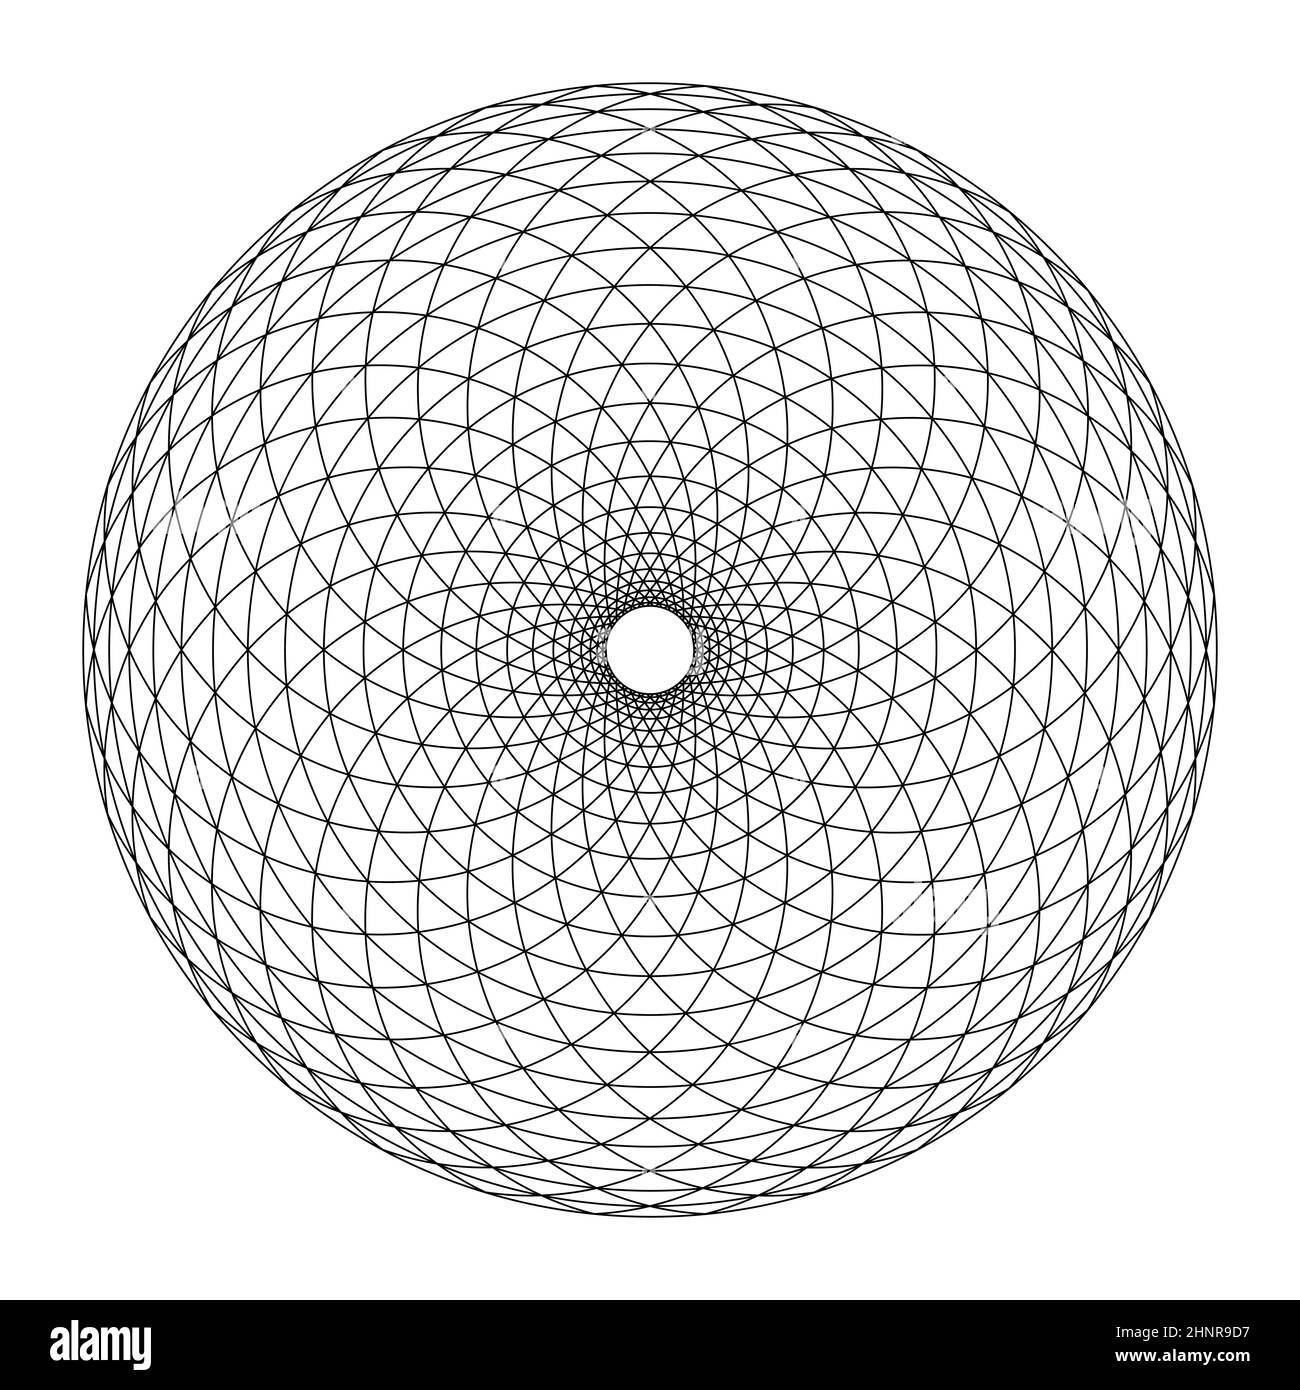 Kreis mit Dreieck Fibonacci Muster. Kreisförmige Fläche, gebildet durch Bögen, spiralförmig angeordnet, durch Kreise gekreuzt, wodurch Biegedreiecke entstehen. Stockfoto